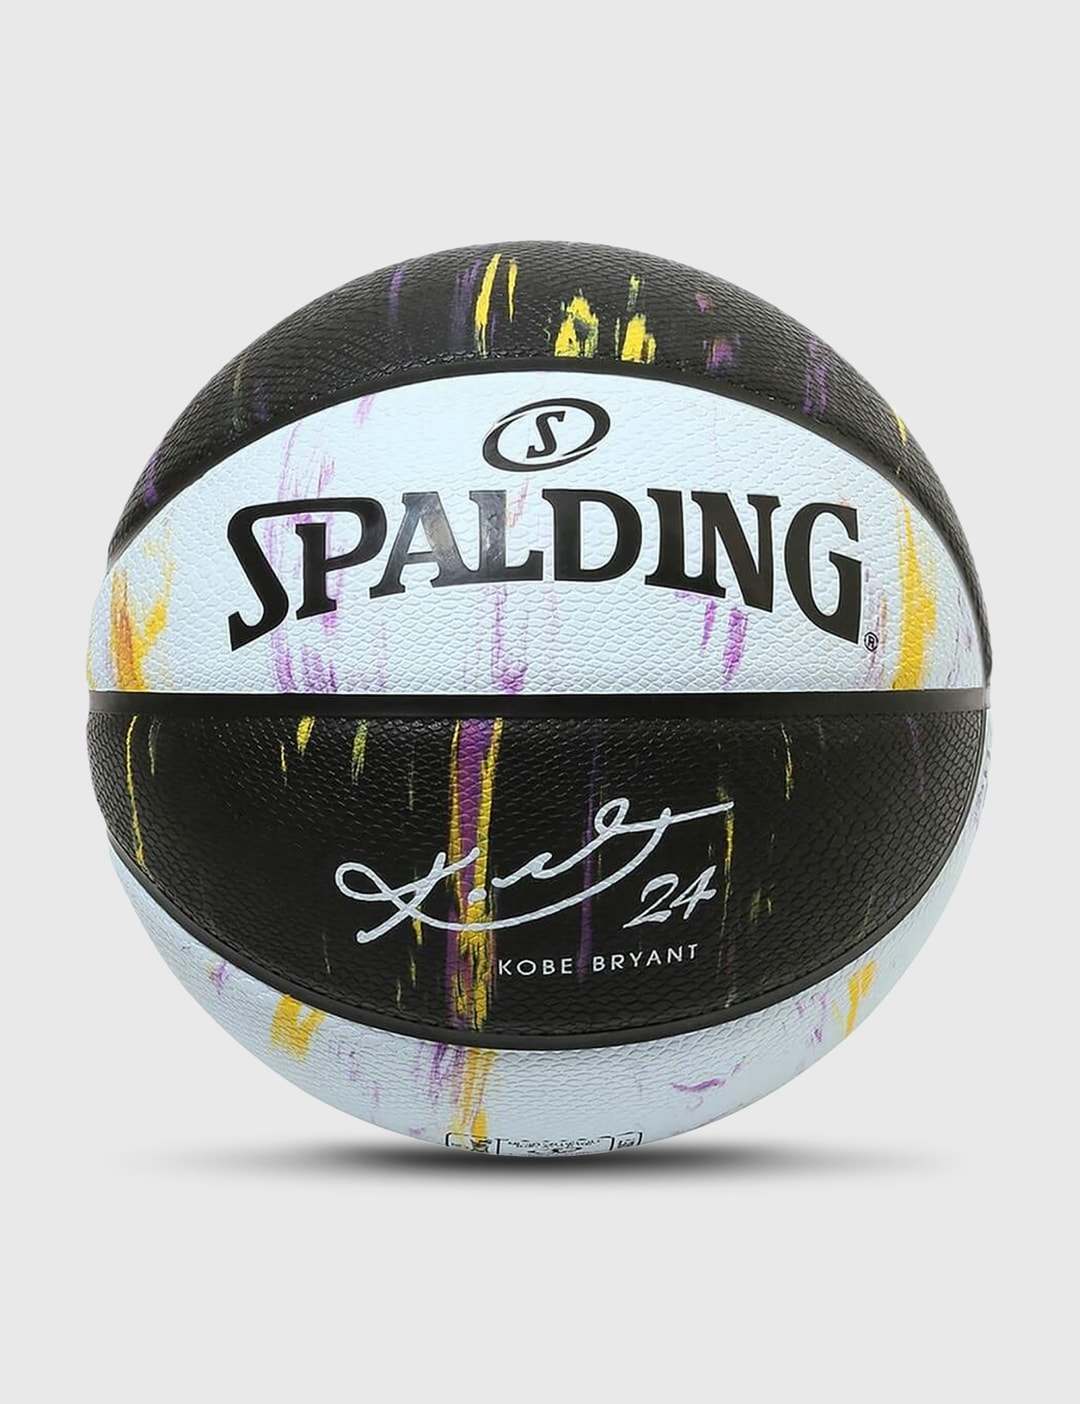 Spalding - Kobe Bryant Alternate Panel Marble Rubber Size 7